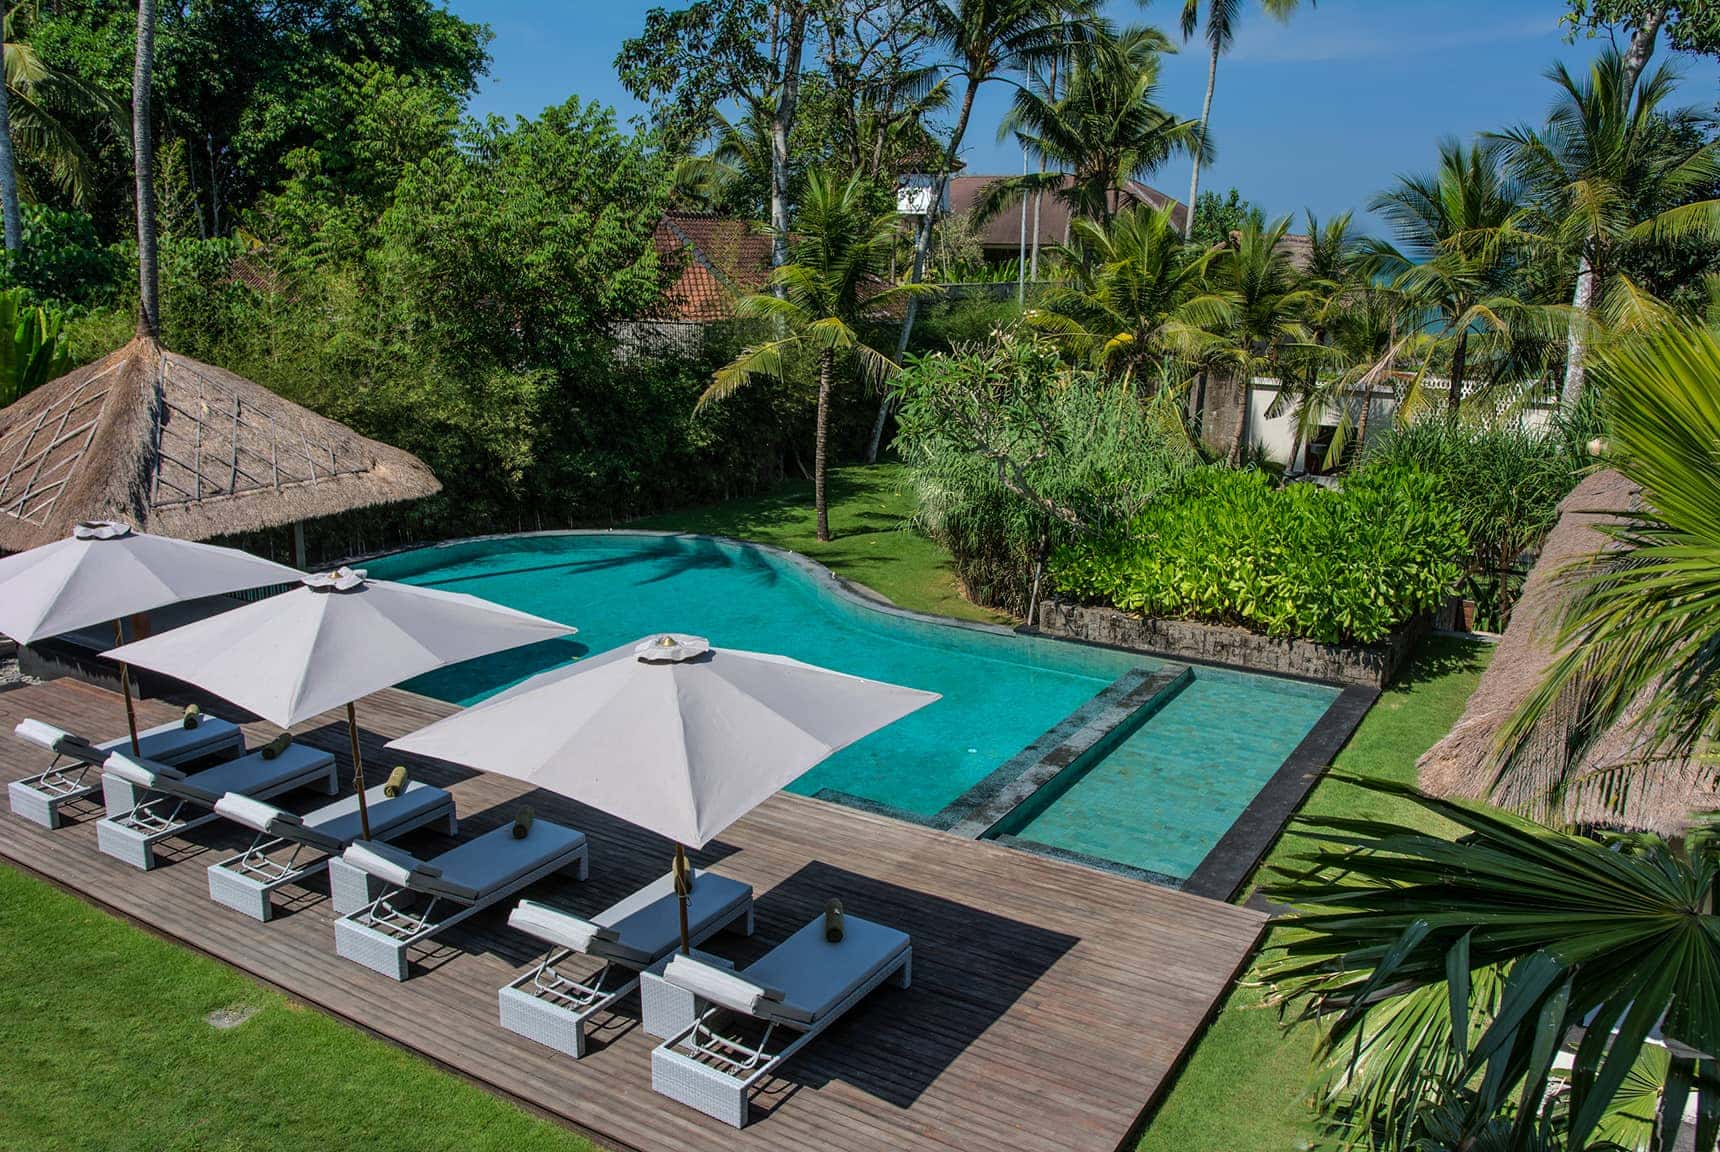 Seseh Beach Villas - Pantai Seseh, Bali Indonesia (Bali villa photography by master photographer Rick Carmichael of LuxViz)